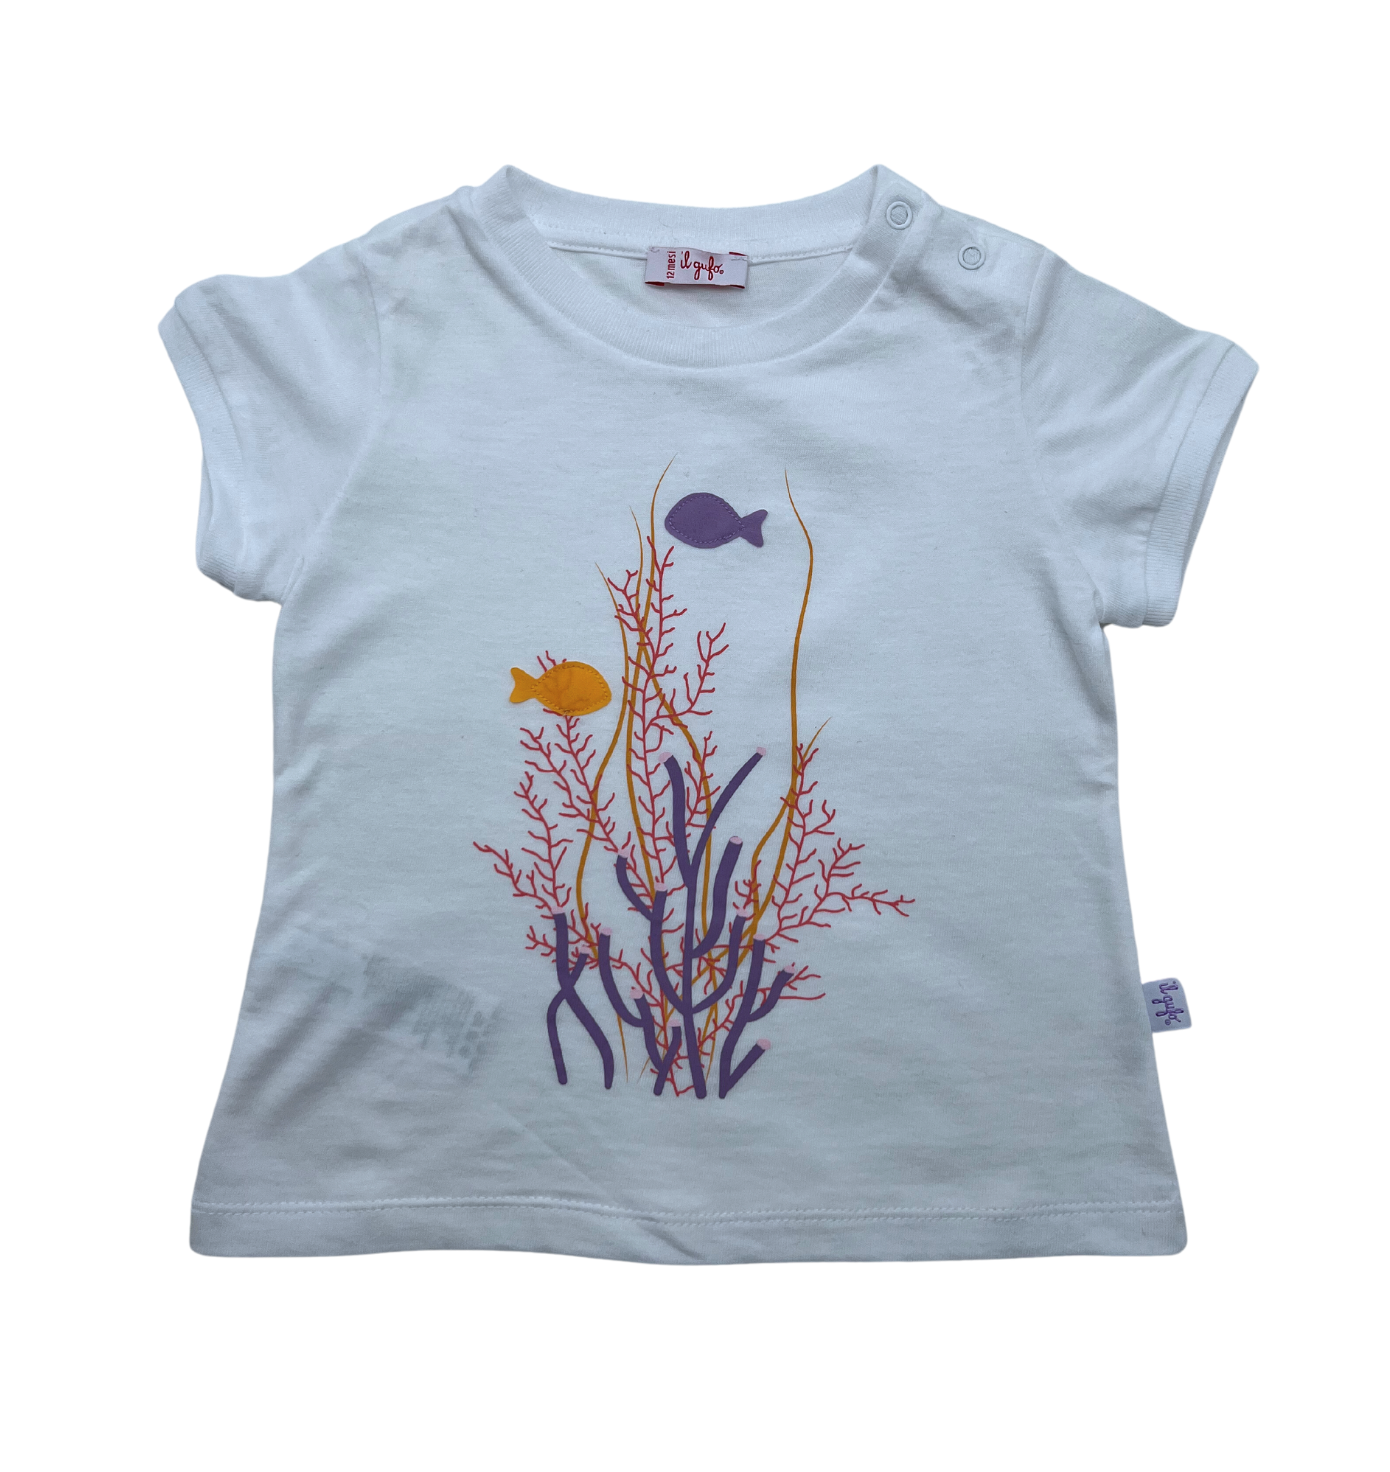 IL GUFO - Fish T-shirt - 1 year